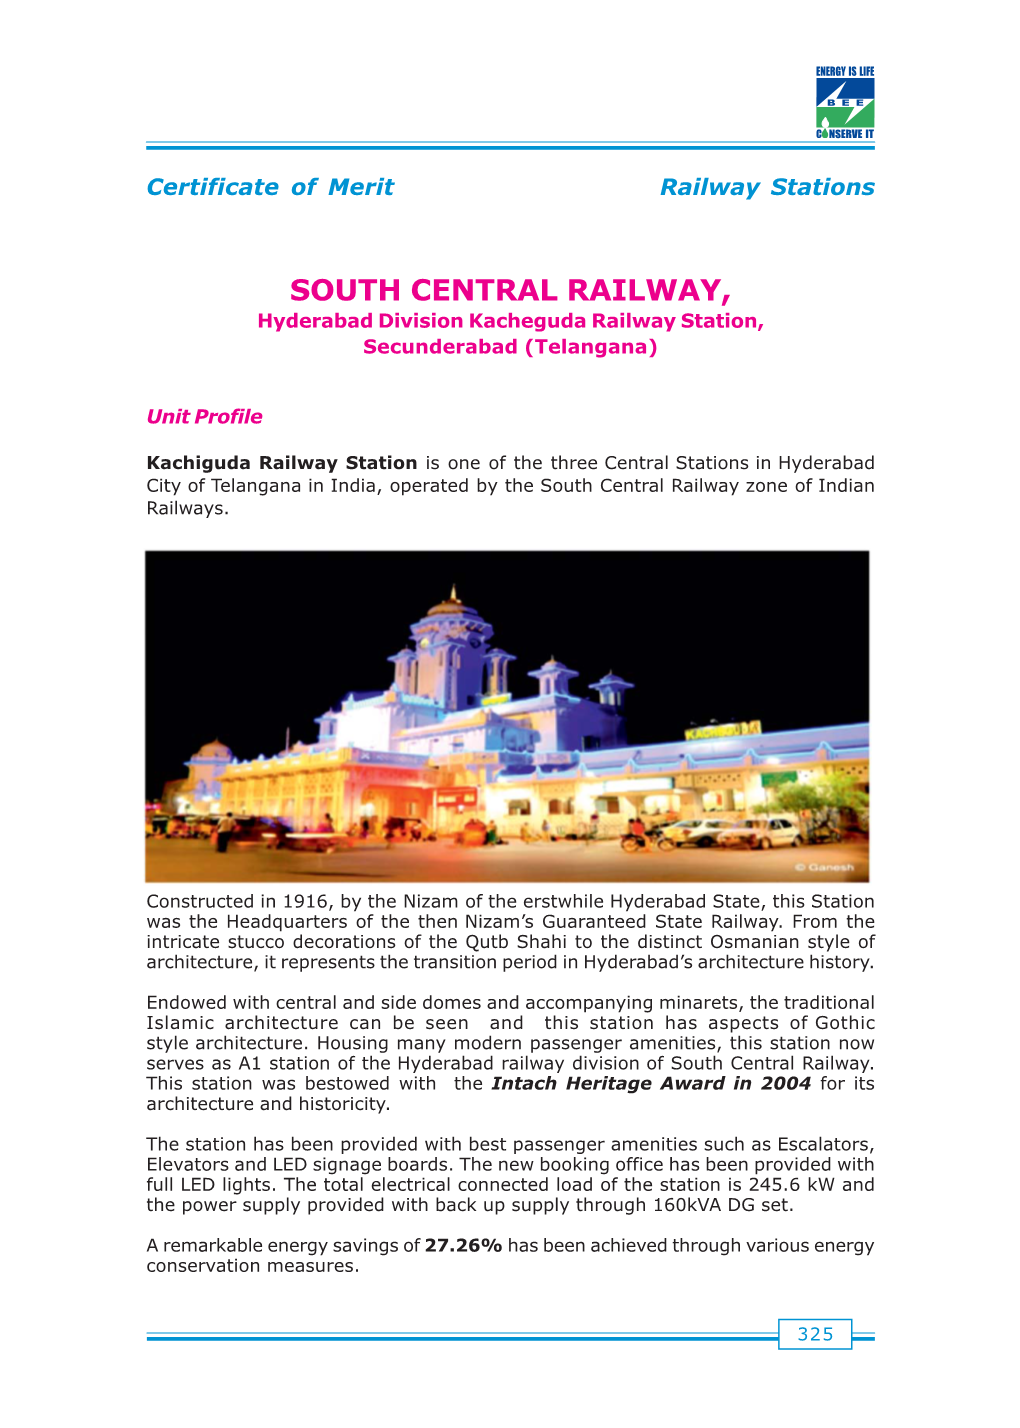 SOUTH CENTRAL RAILWAY, Hyderabad Division Kacheguda Railway Station, Secunderabad (Telangana)